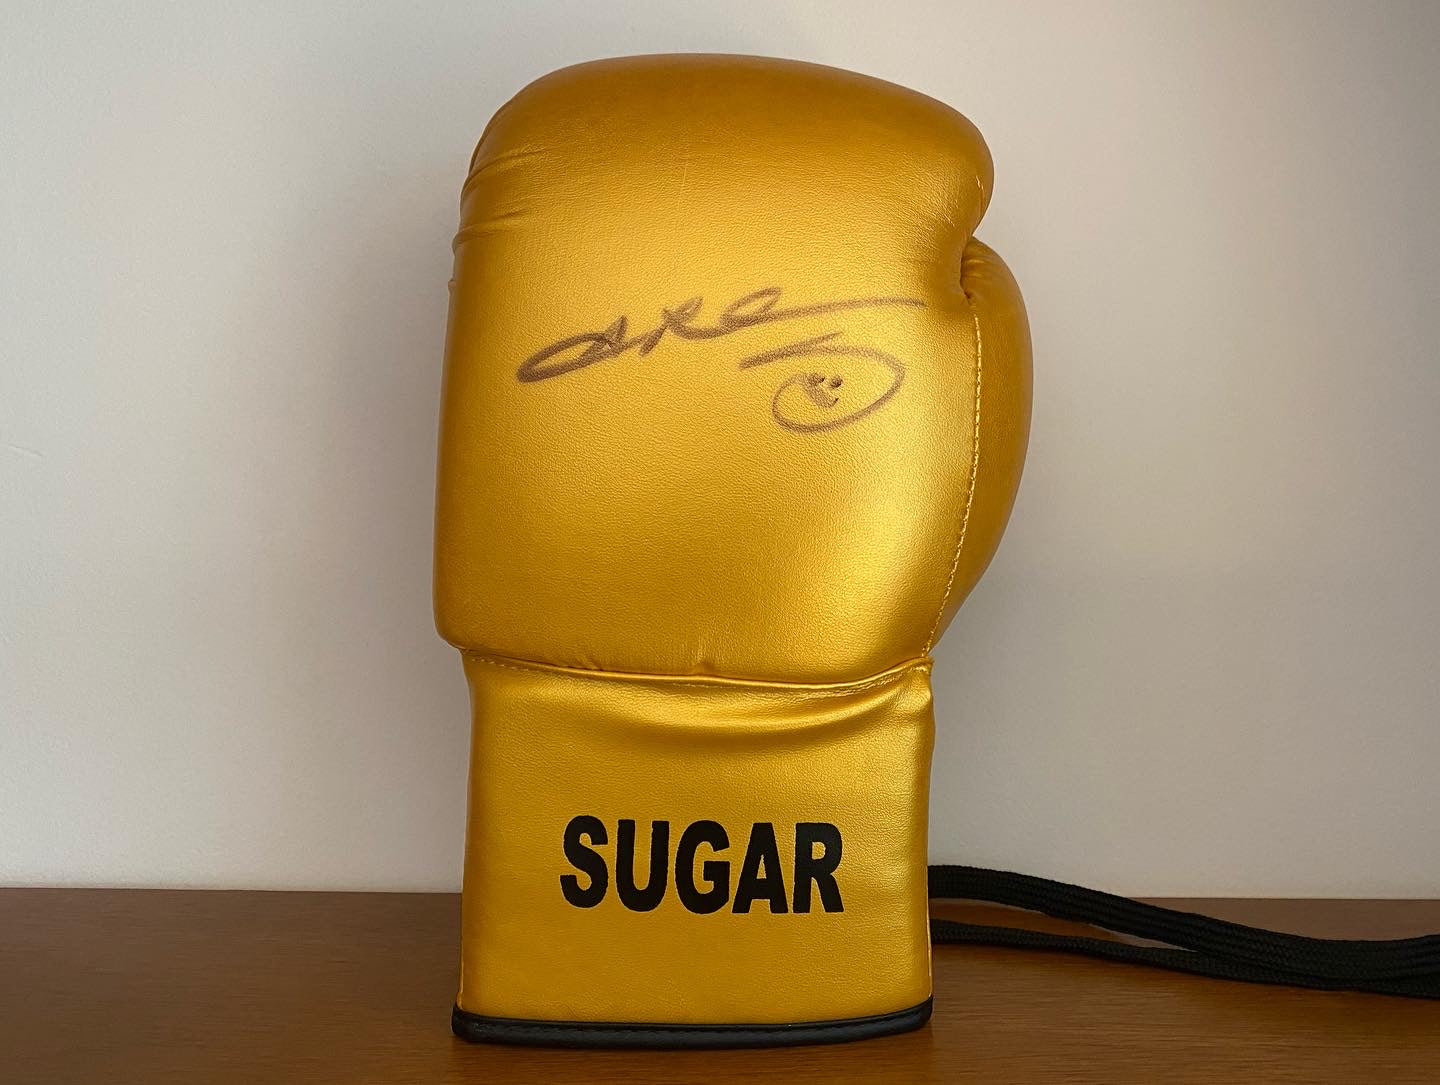 Sugar Ray Leonard signed Golden Sugar Boxing Glove.